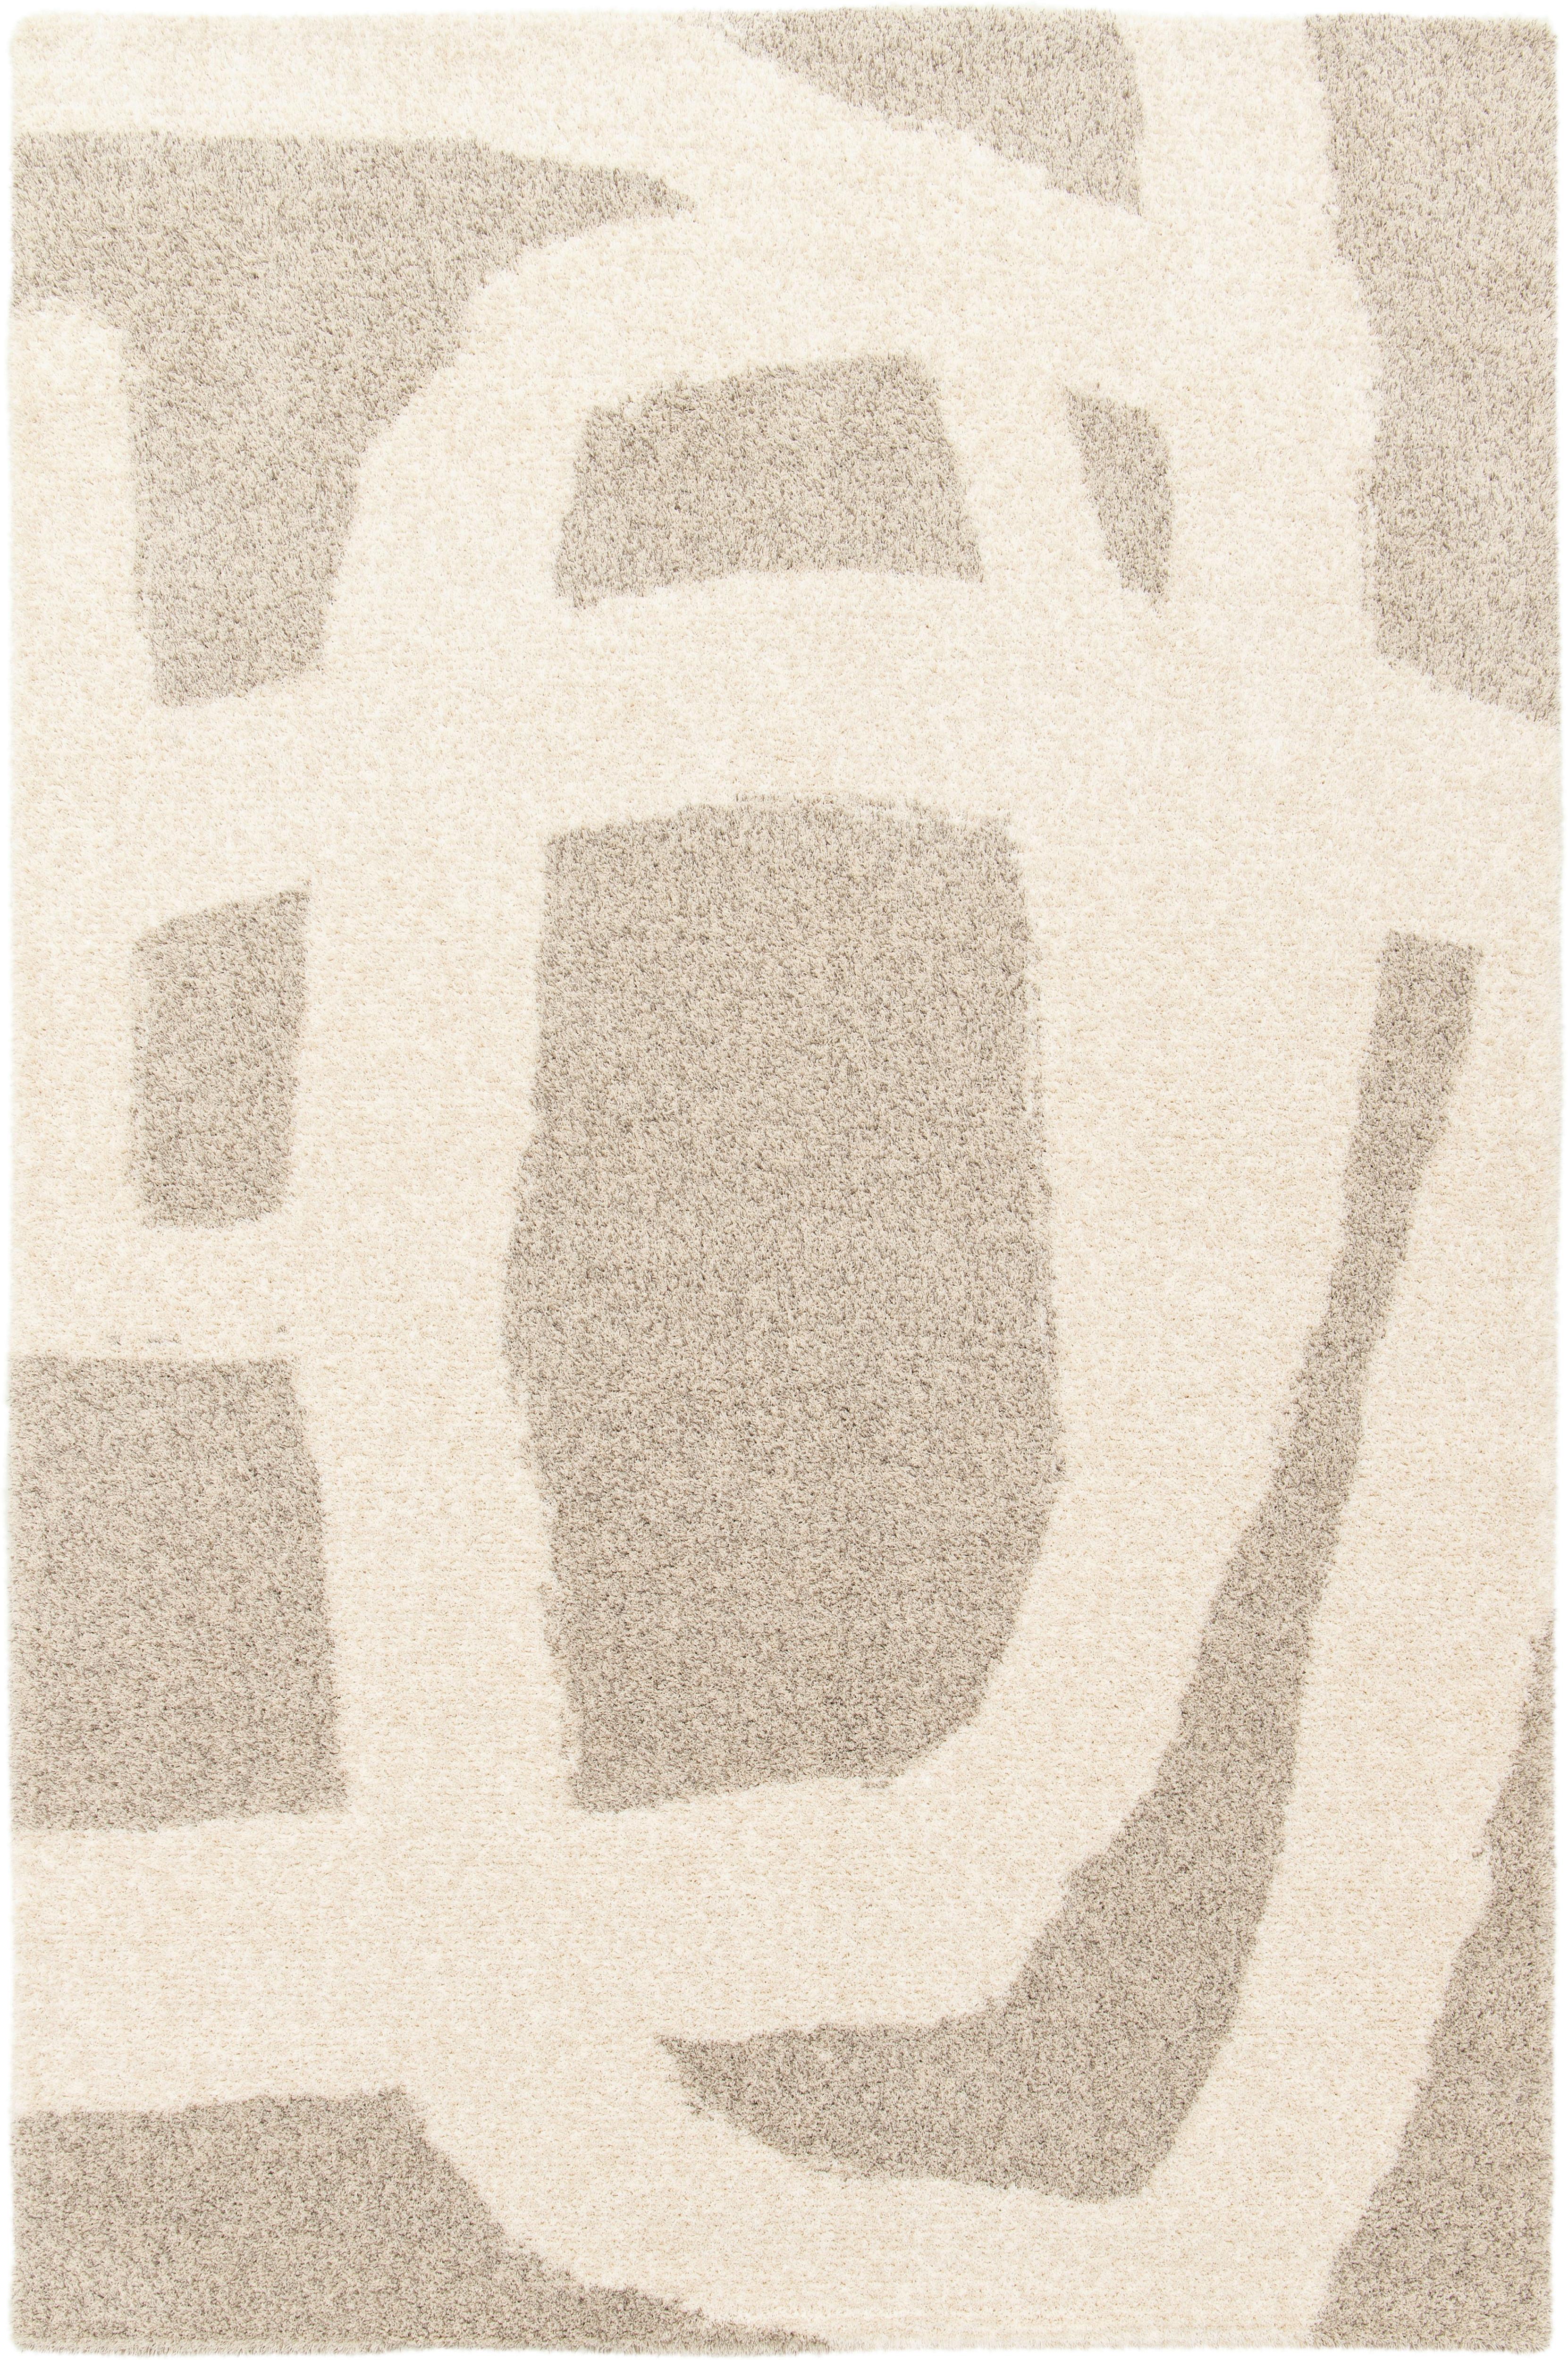 Tkani Tepih Lilly 1 - bež/krem, Modern, tekstil (80/150cm) - Modern Living